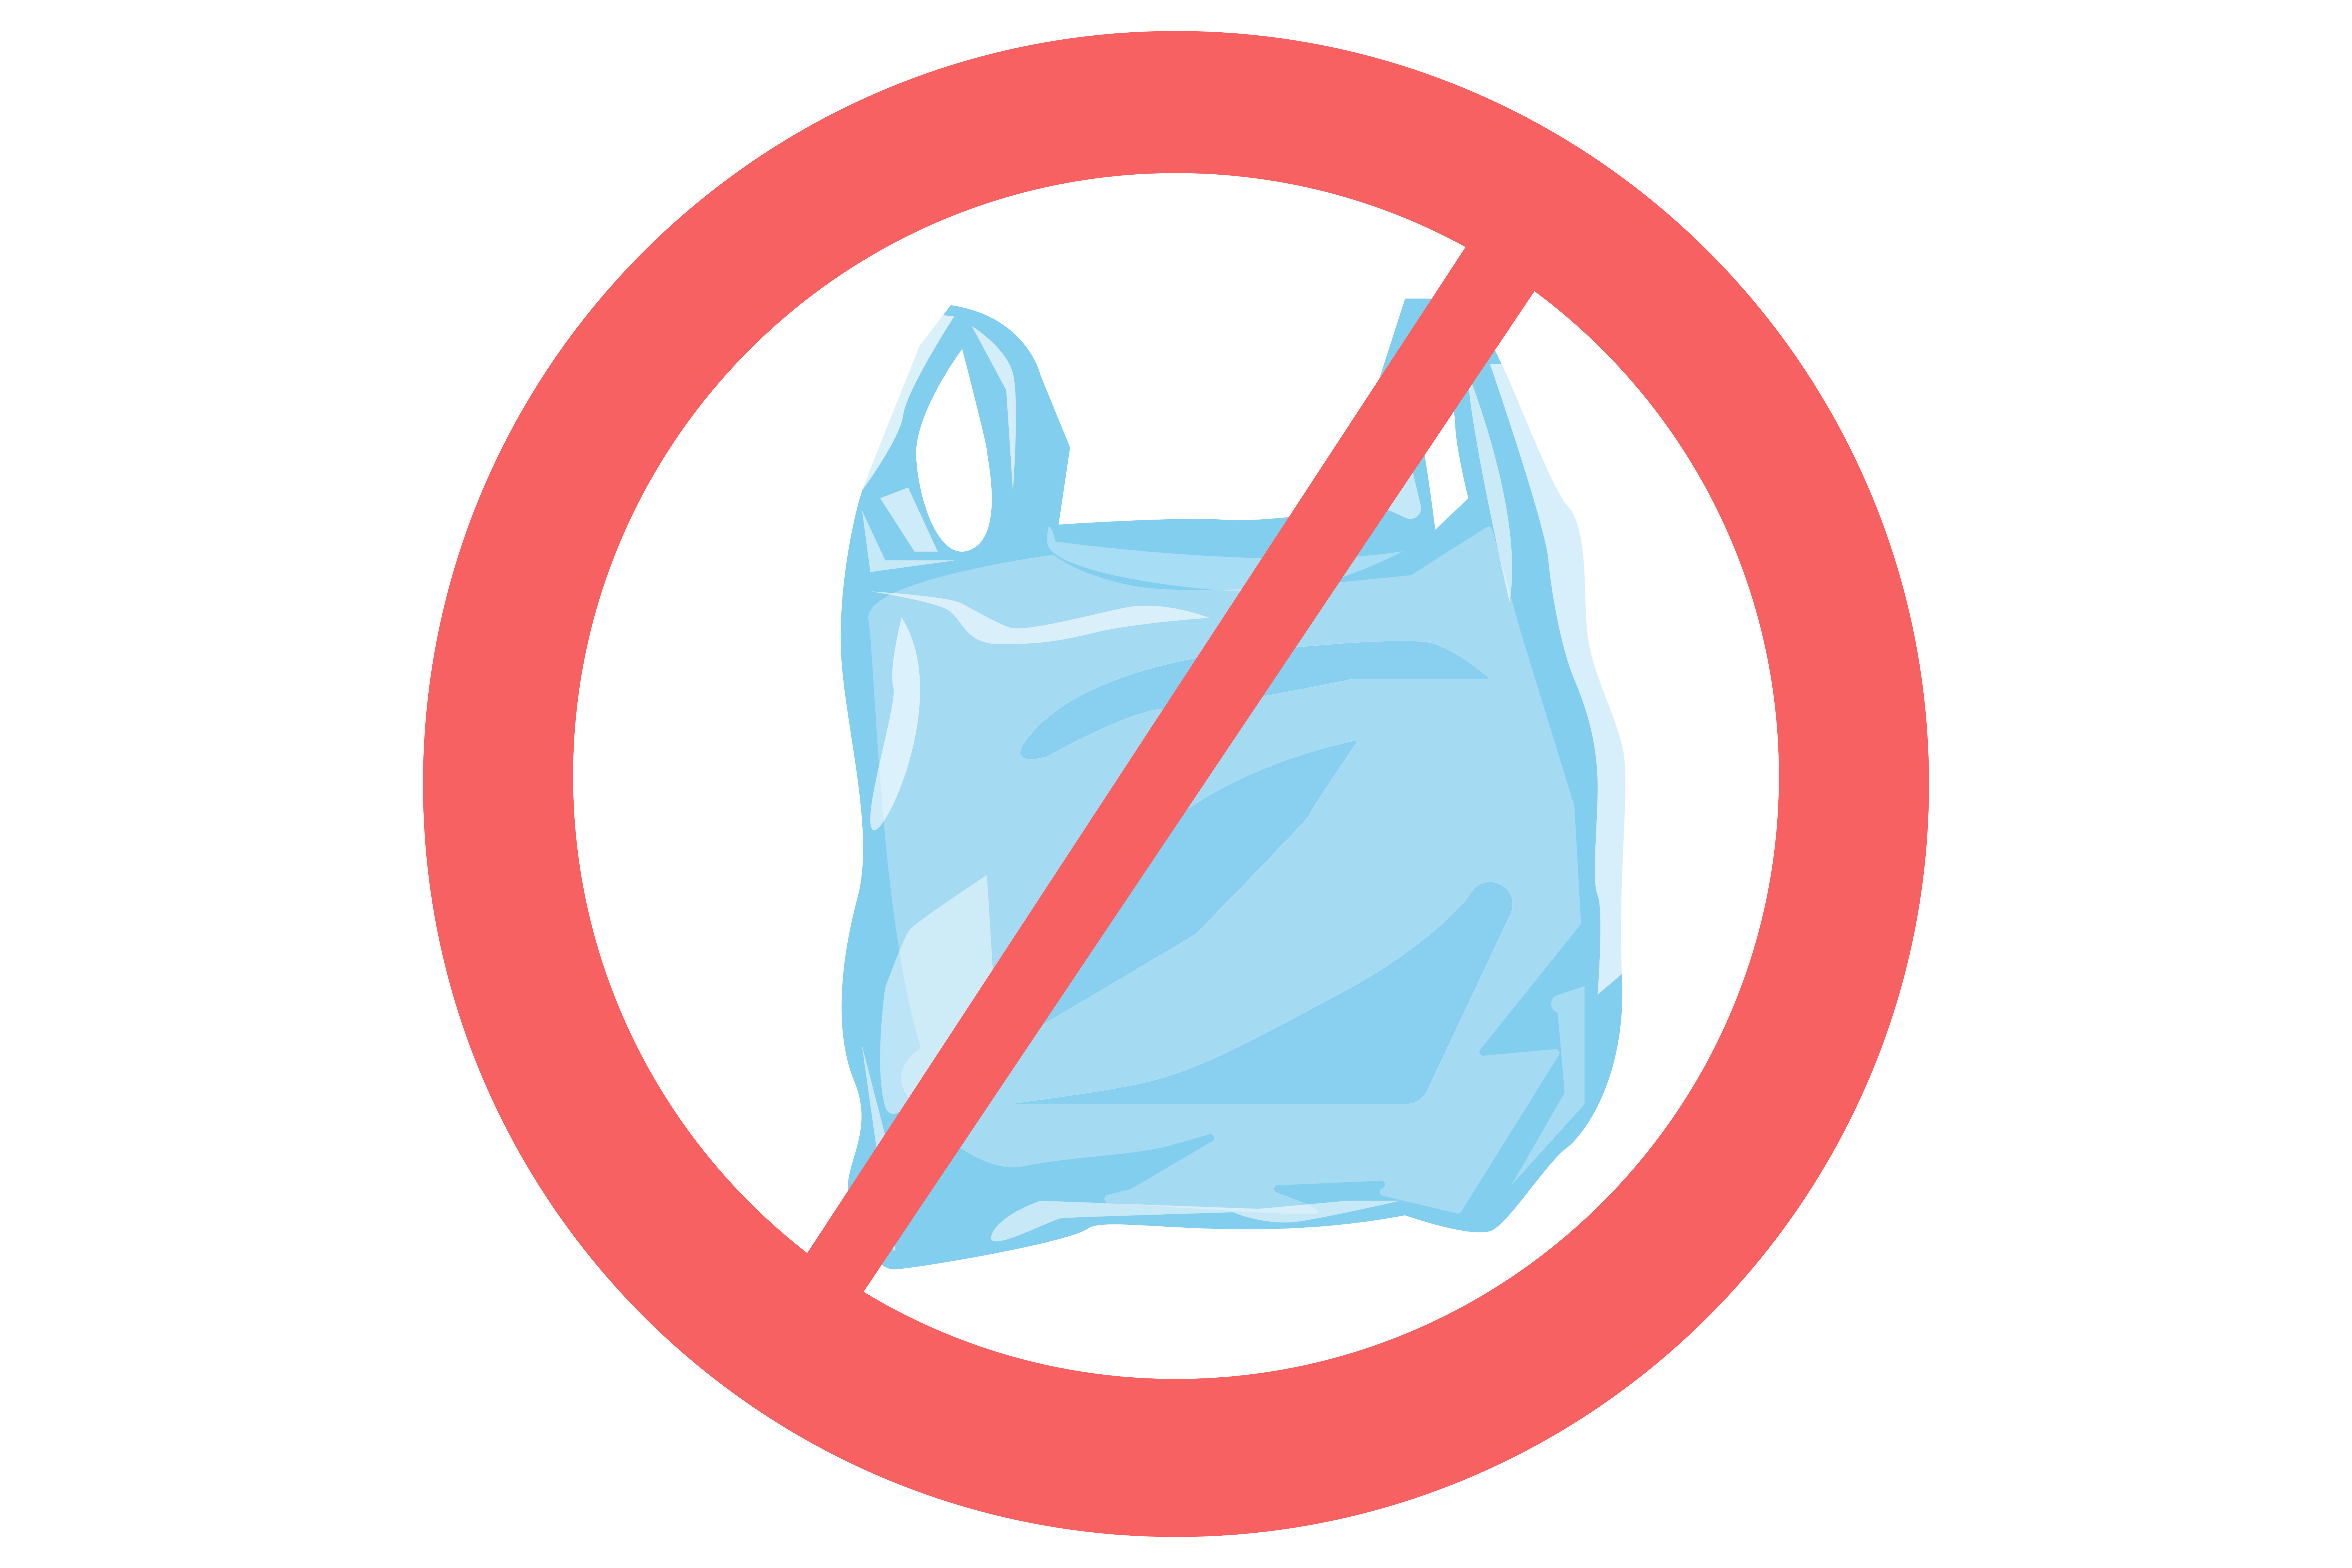 Plastic bag ban in india : A step towards sustainability-Nova